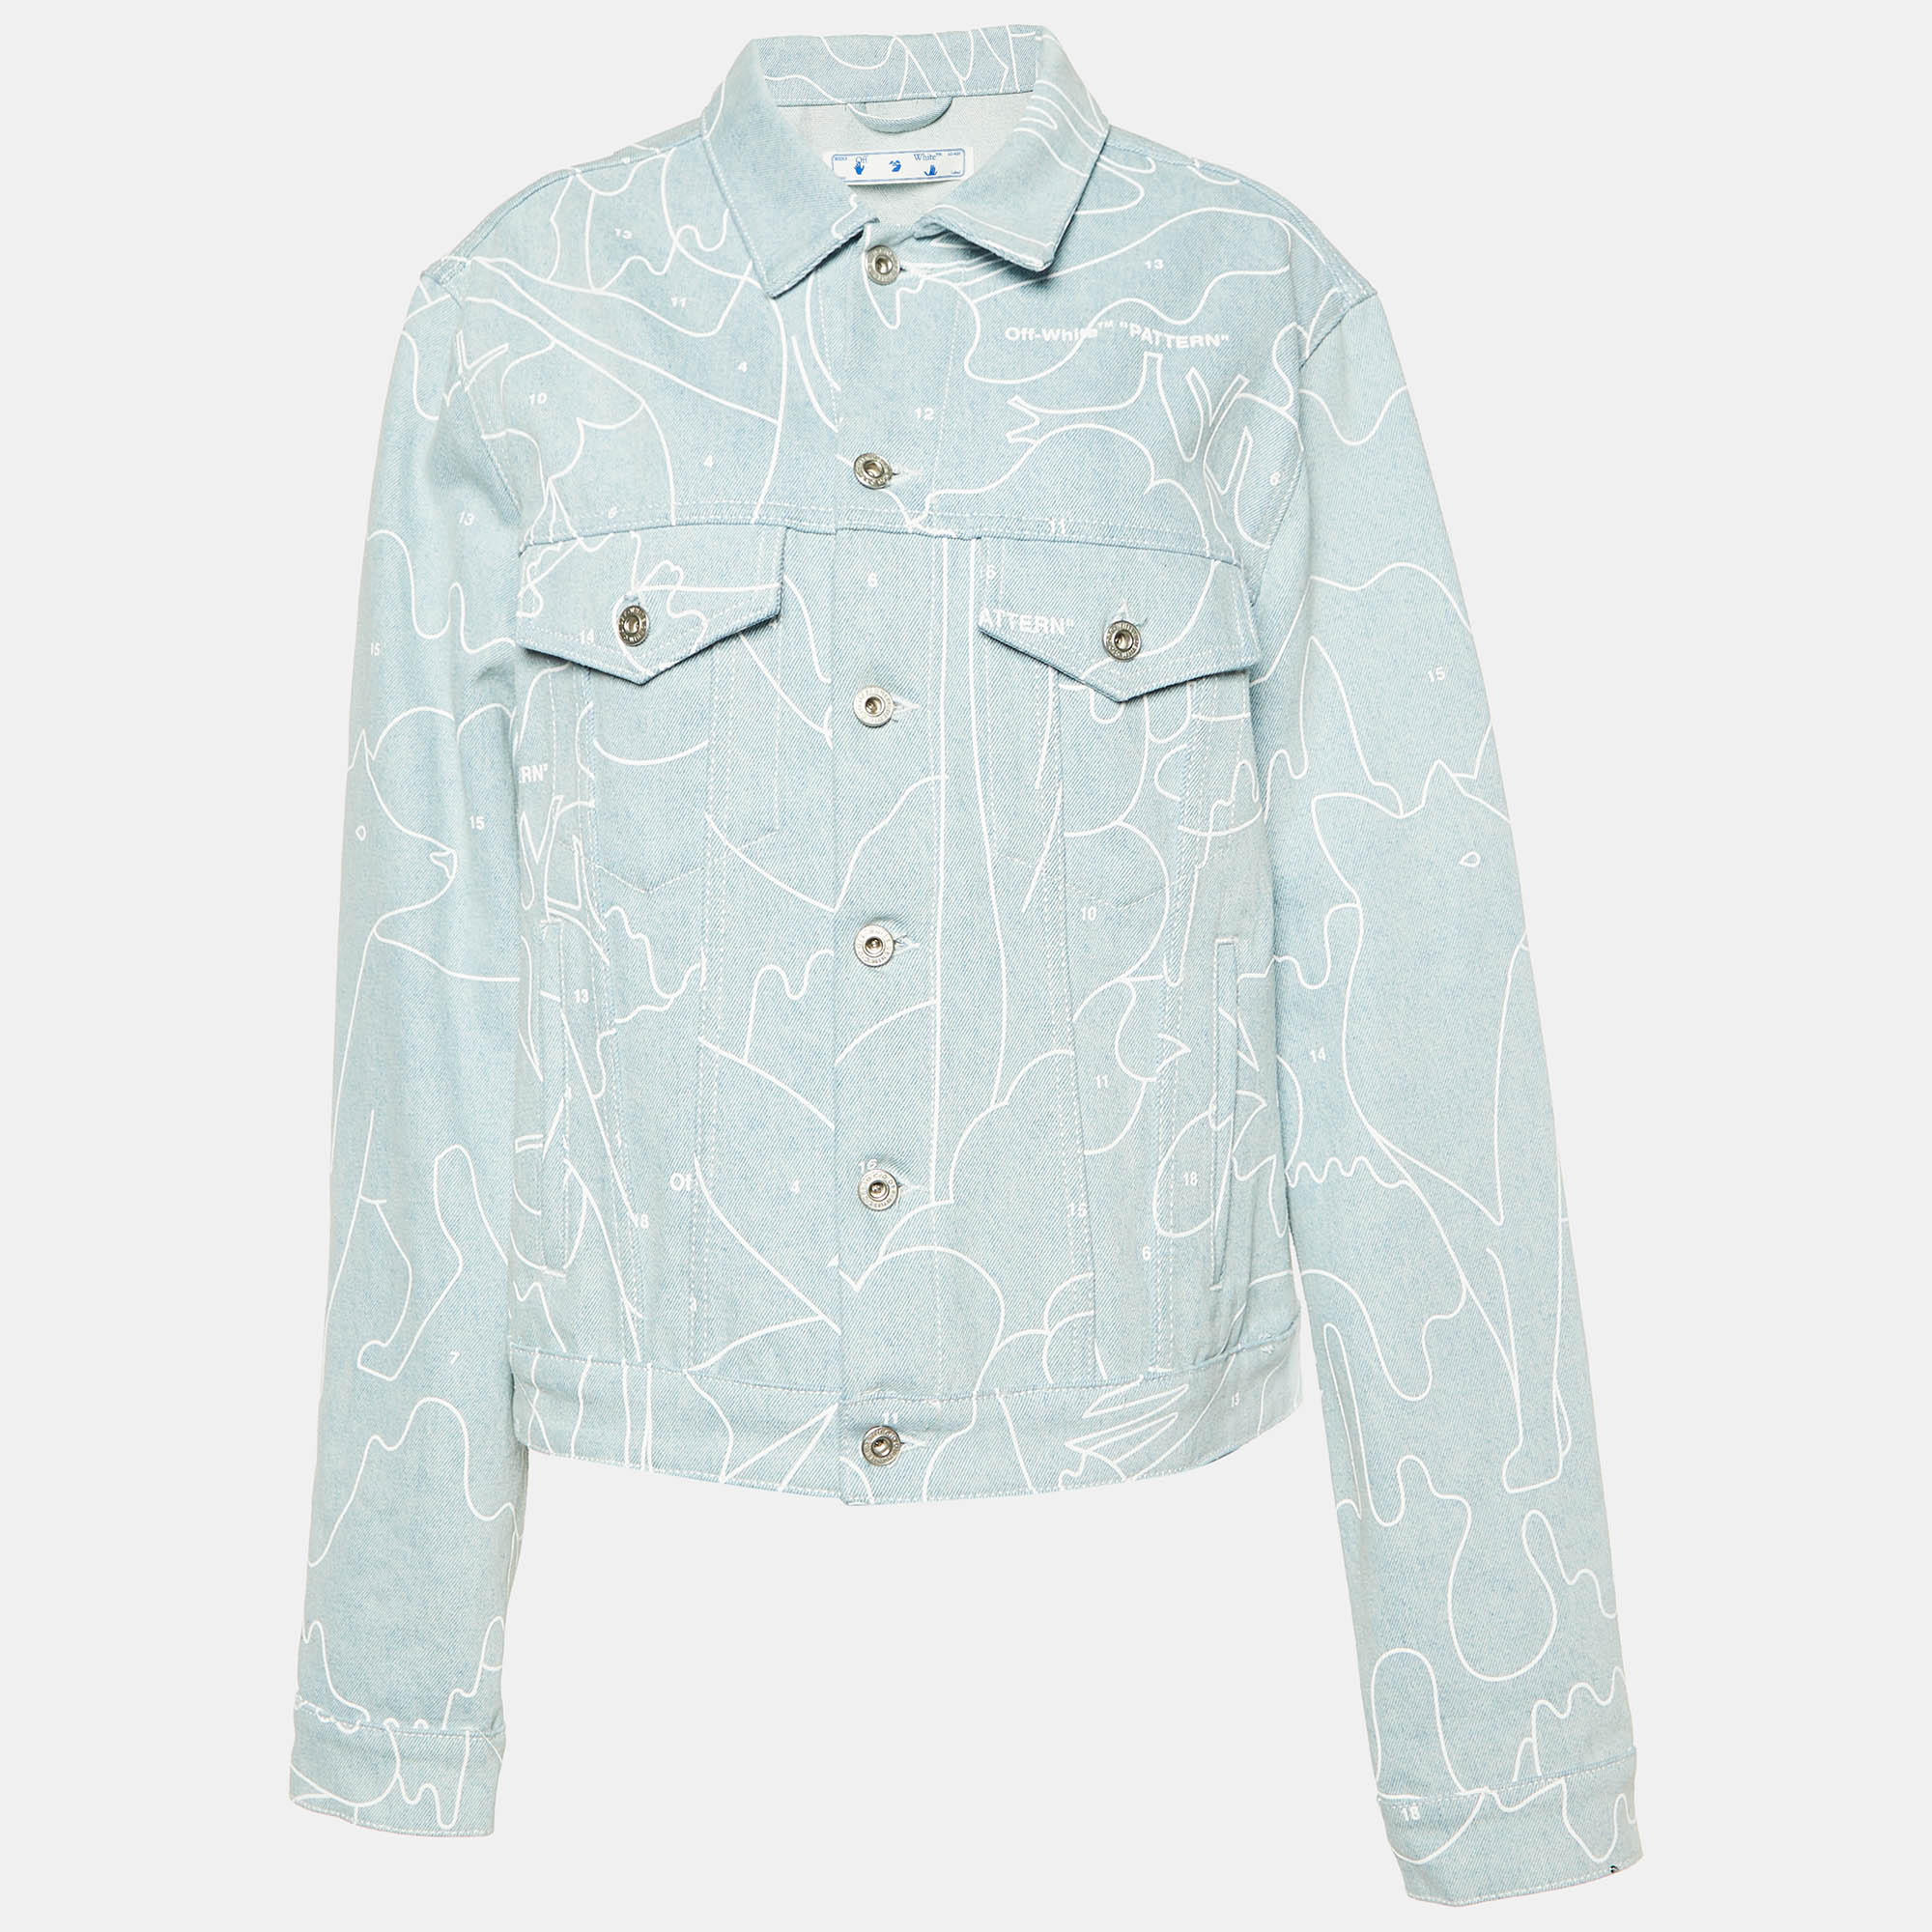 Off-white blue printed denim jacket l